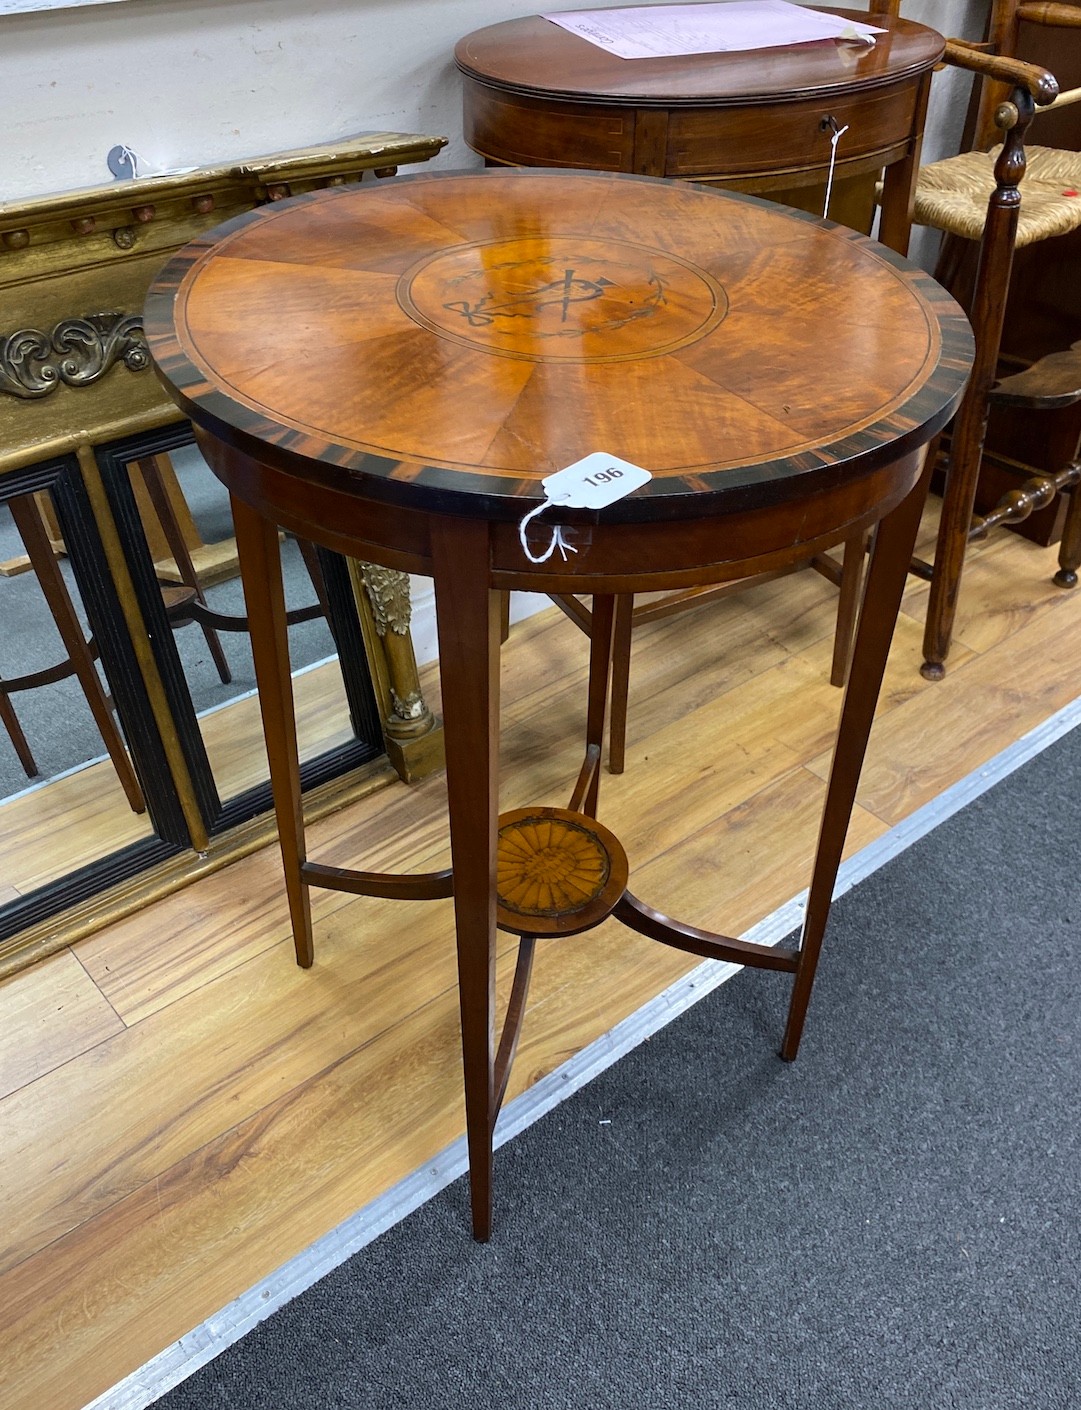 An Edwardian coromandel banded inlaid satinwood circular occasional table, diameter 51cm, height 72cm